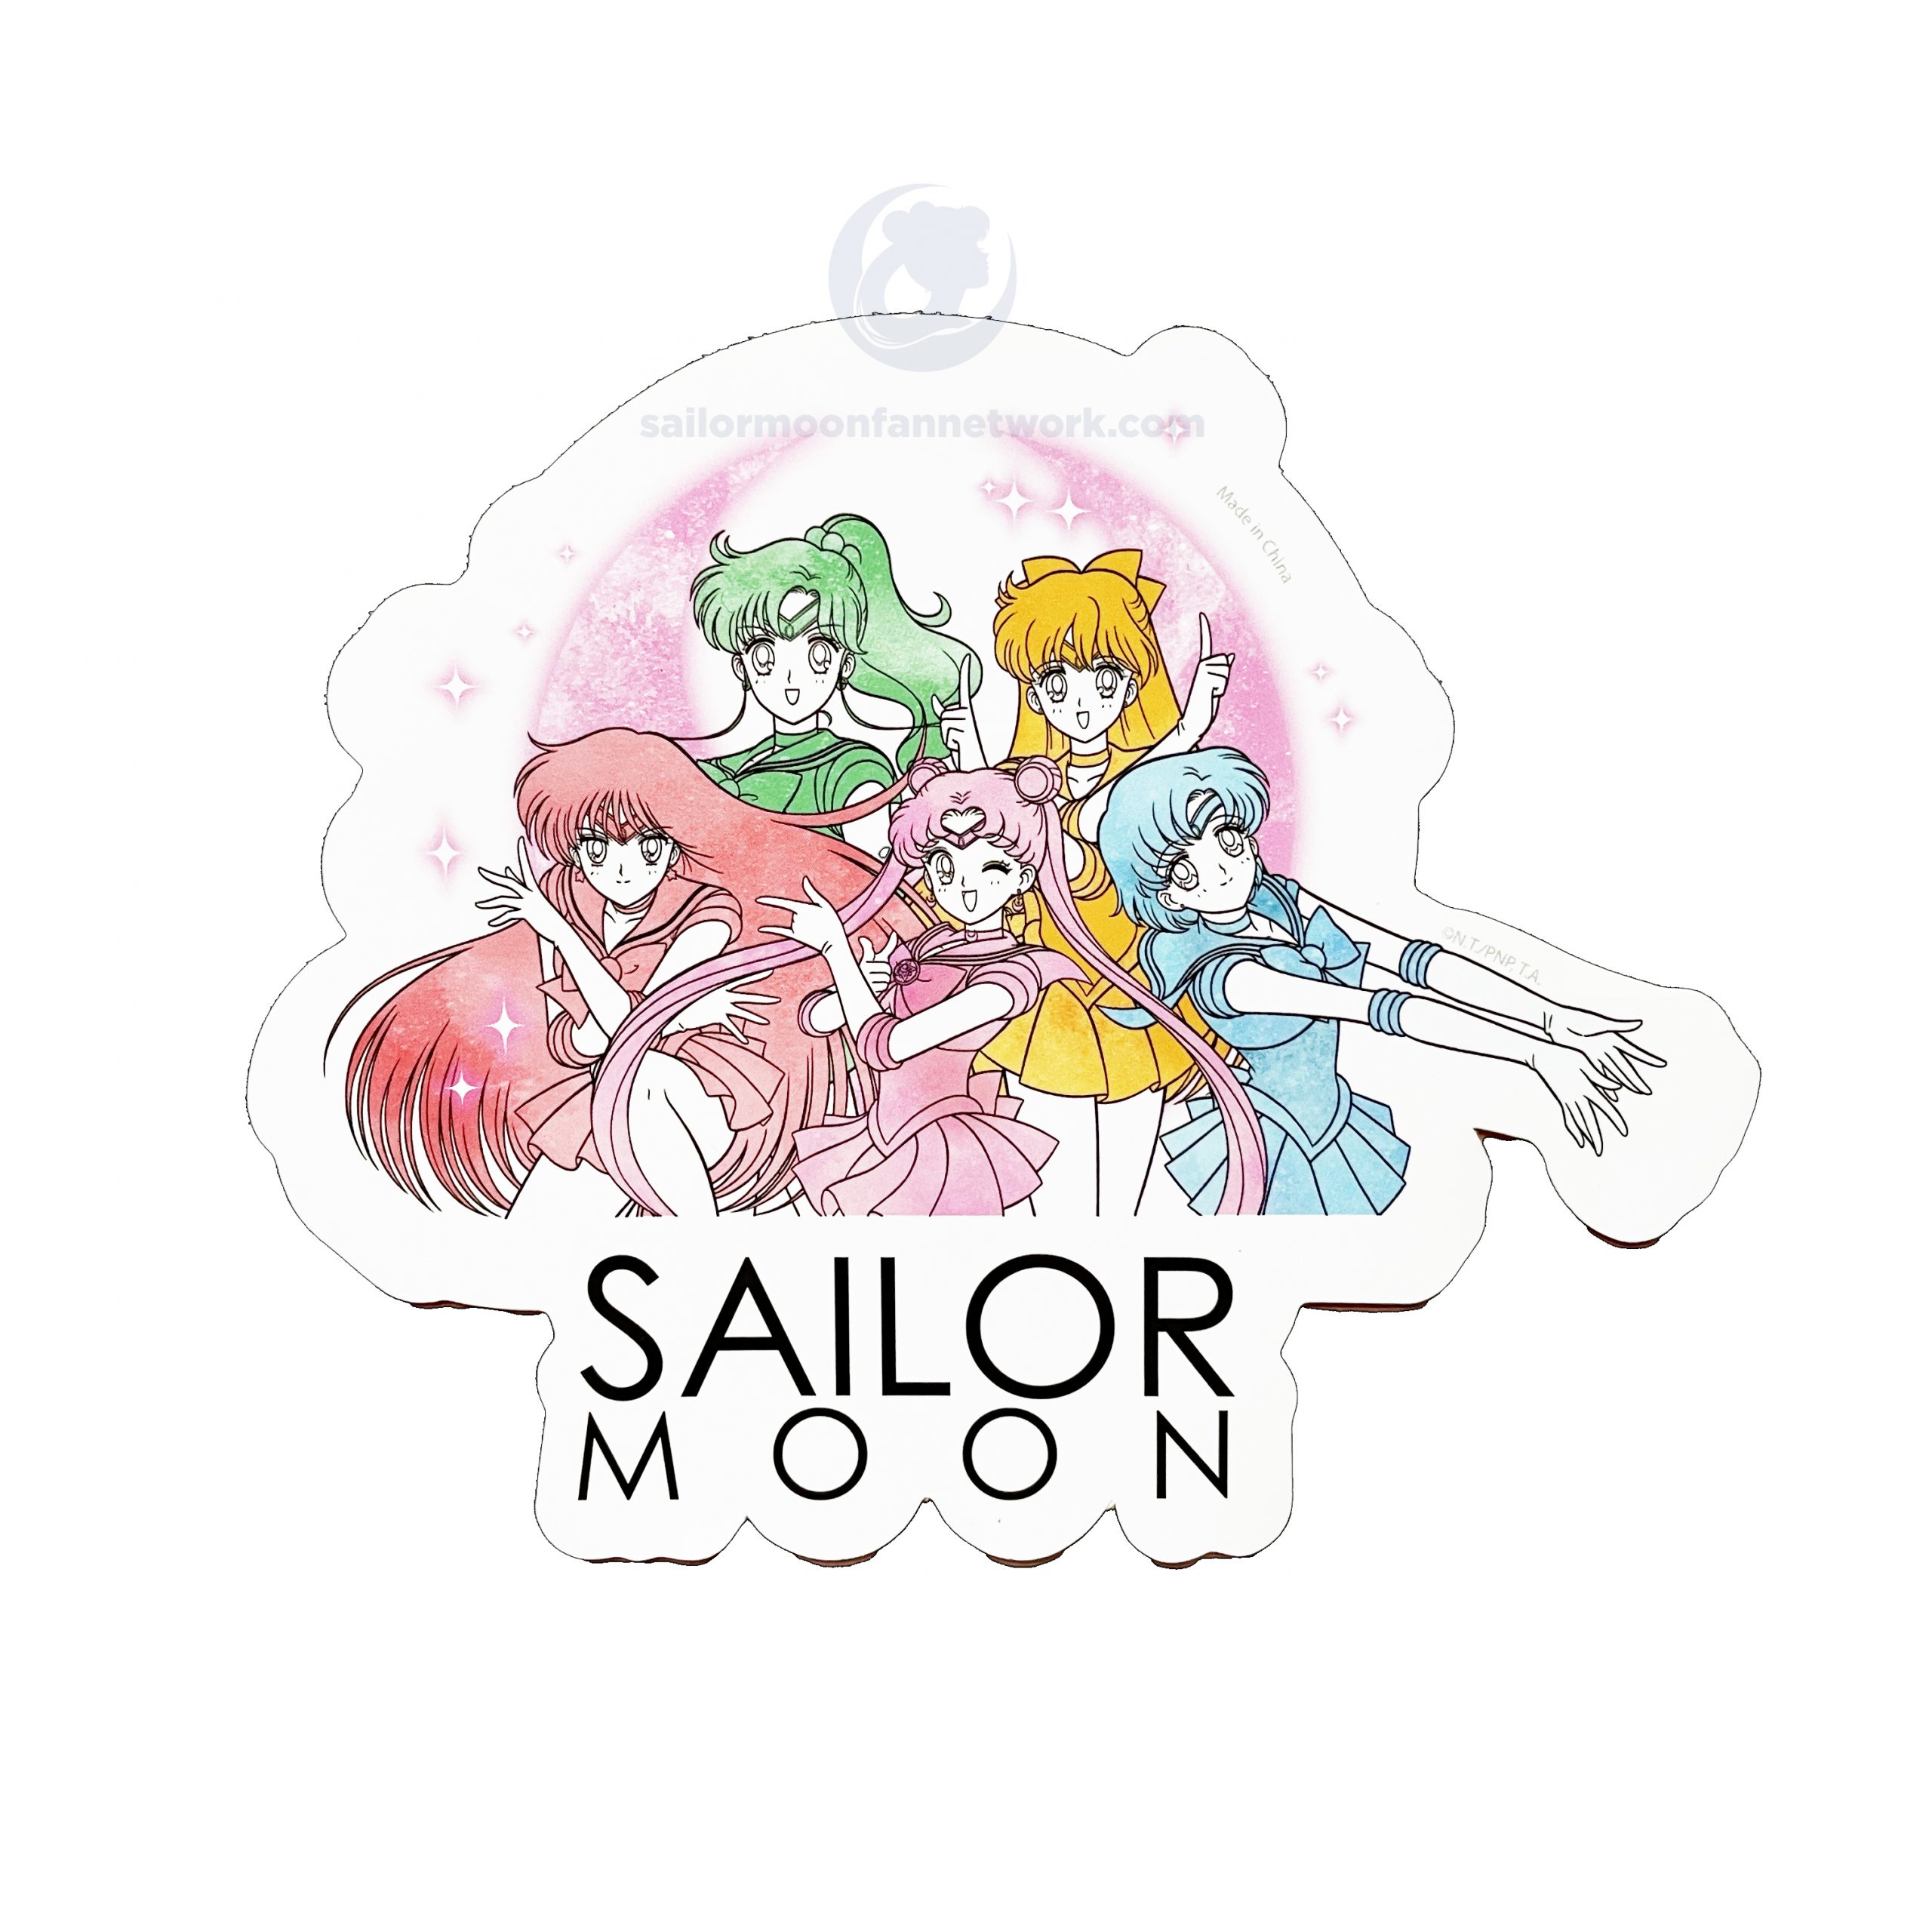 https://sailormoonfannetwork.com/wp-content/uploads/2022/11/groupstickercolors-scaled.jpg